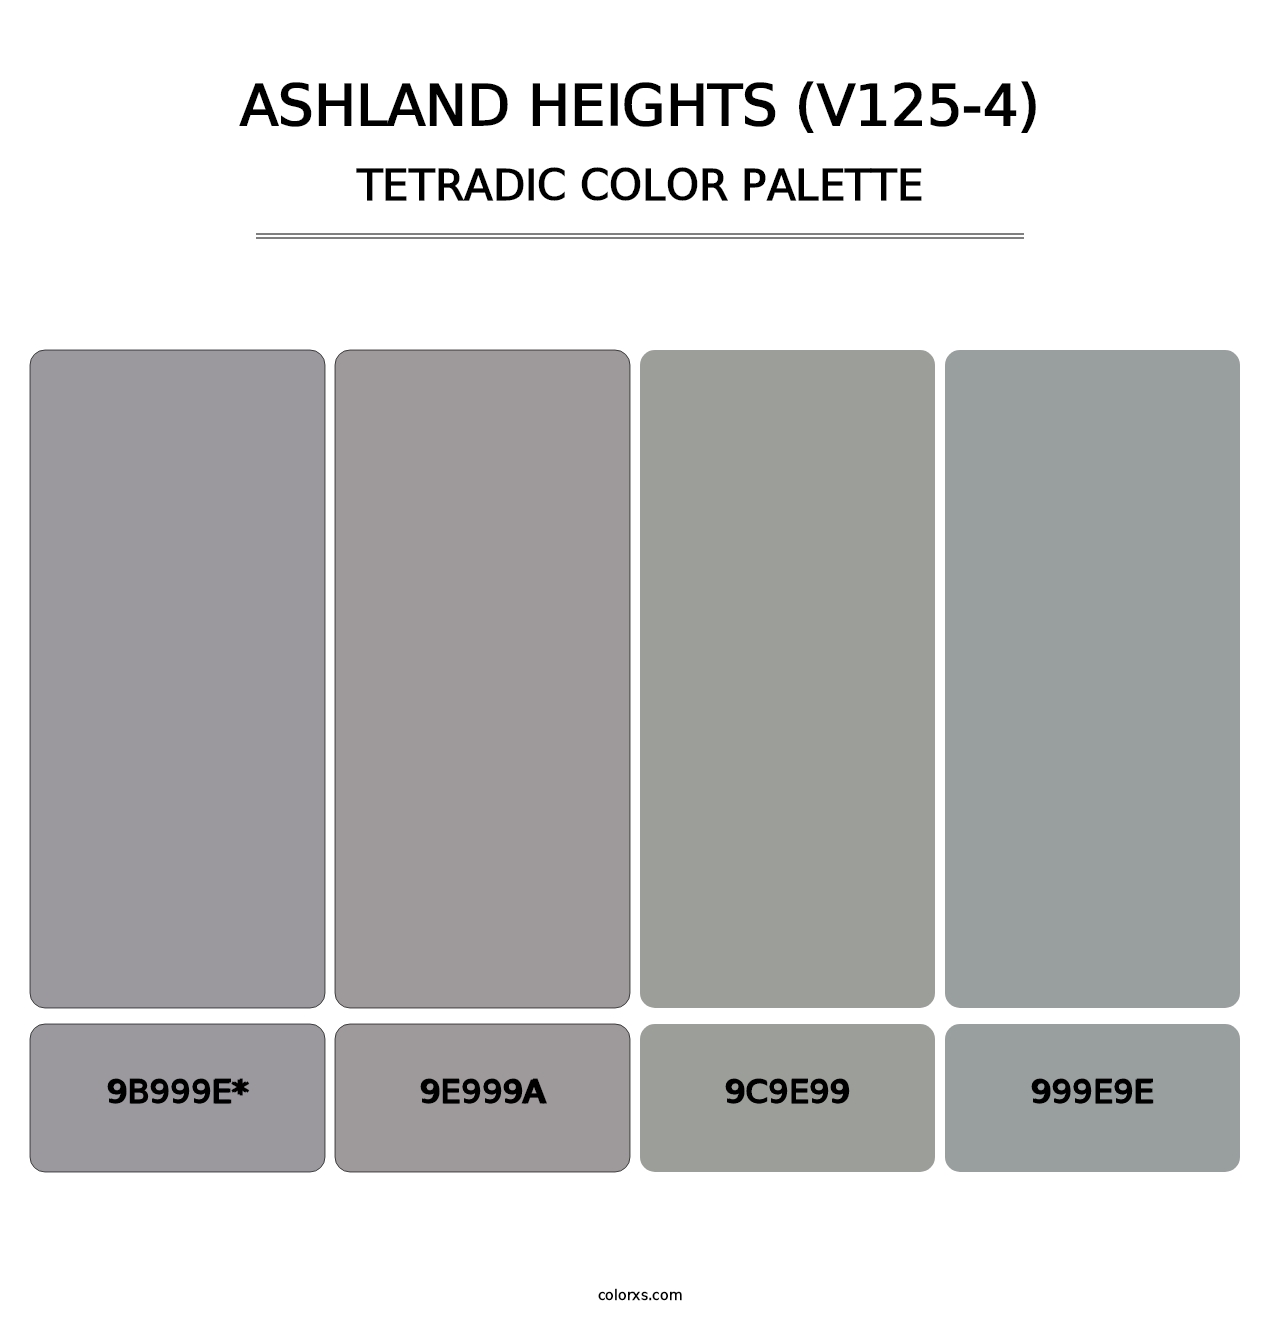 Ashland Heights (V125-4) - Tetradic Color Palette